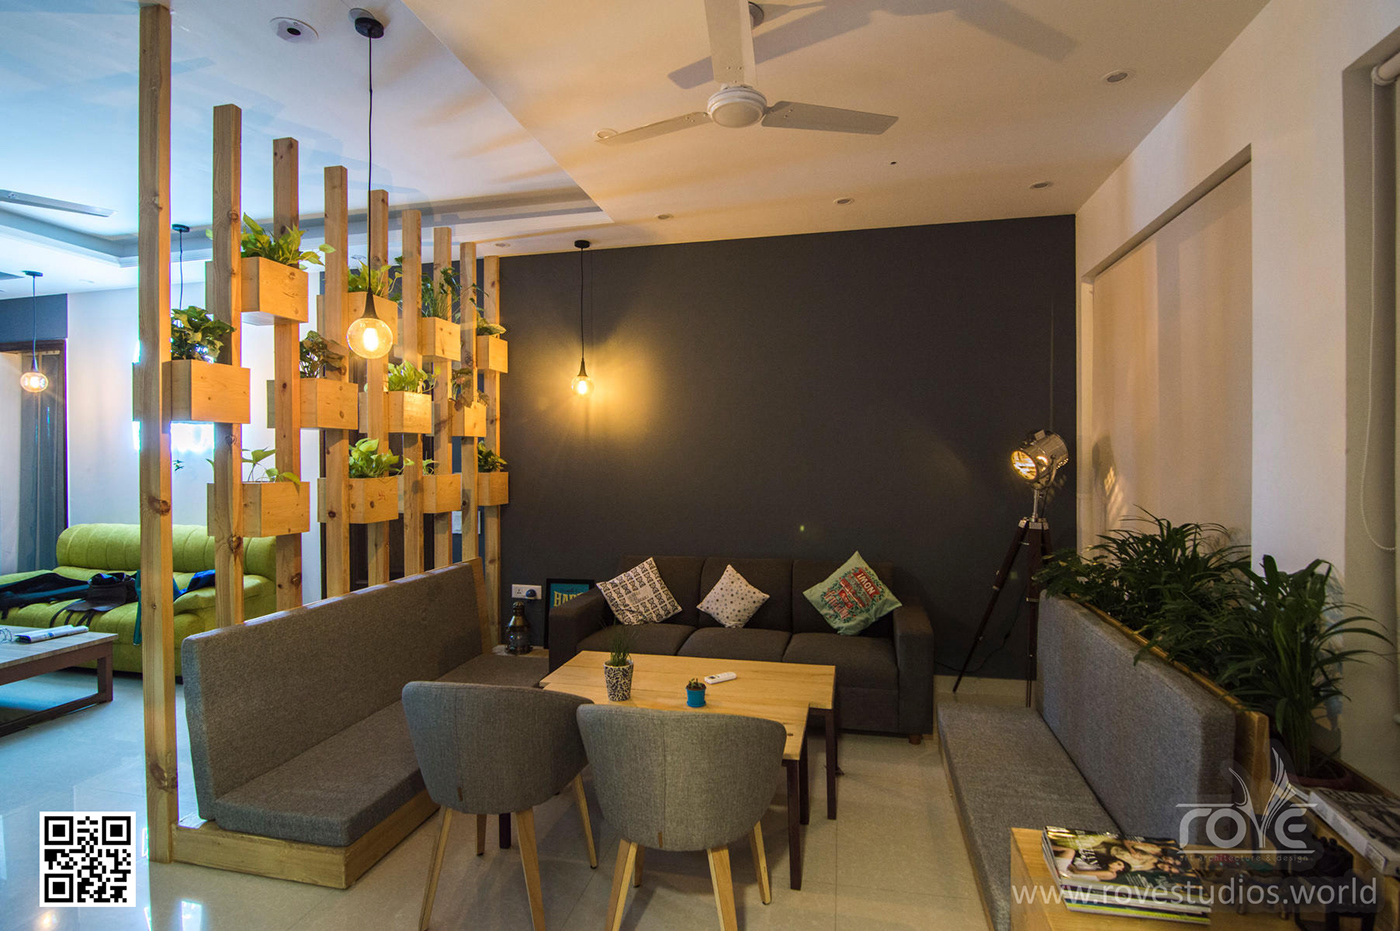 Office Interior design planters warm light soothing interior wooden interior